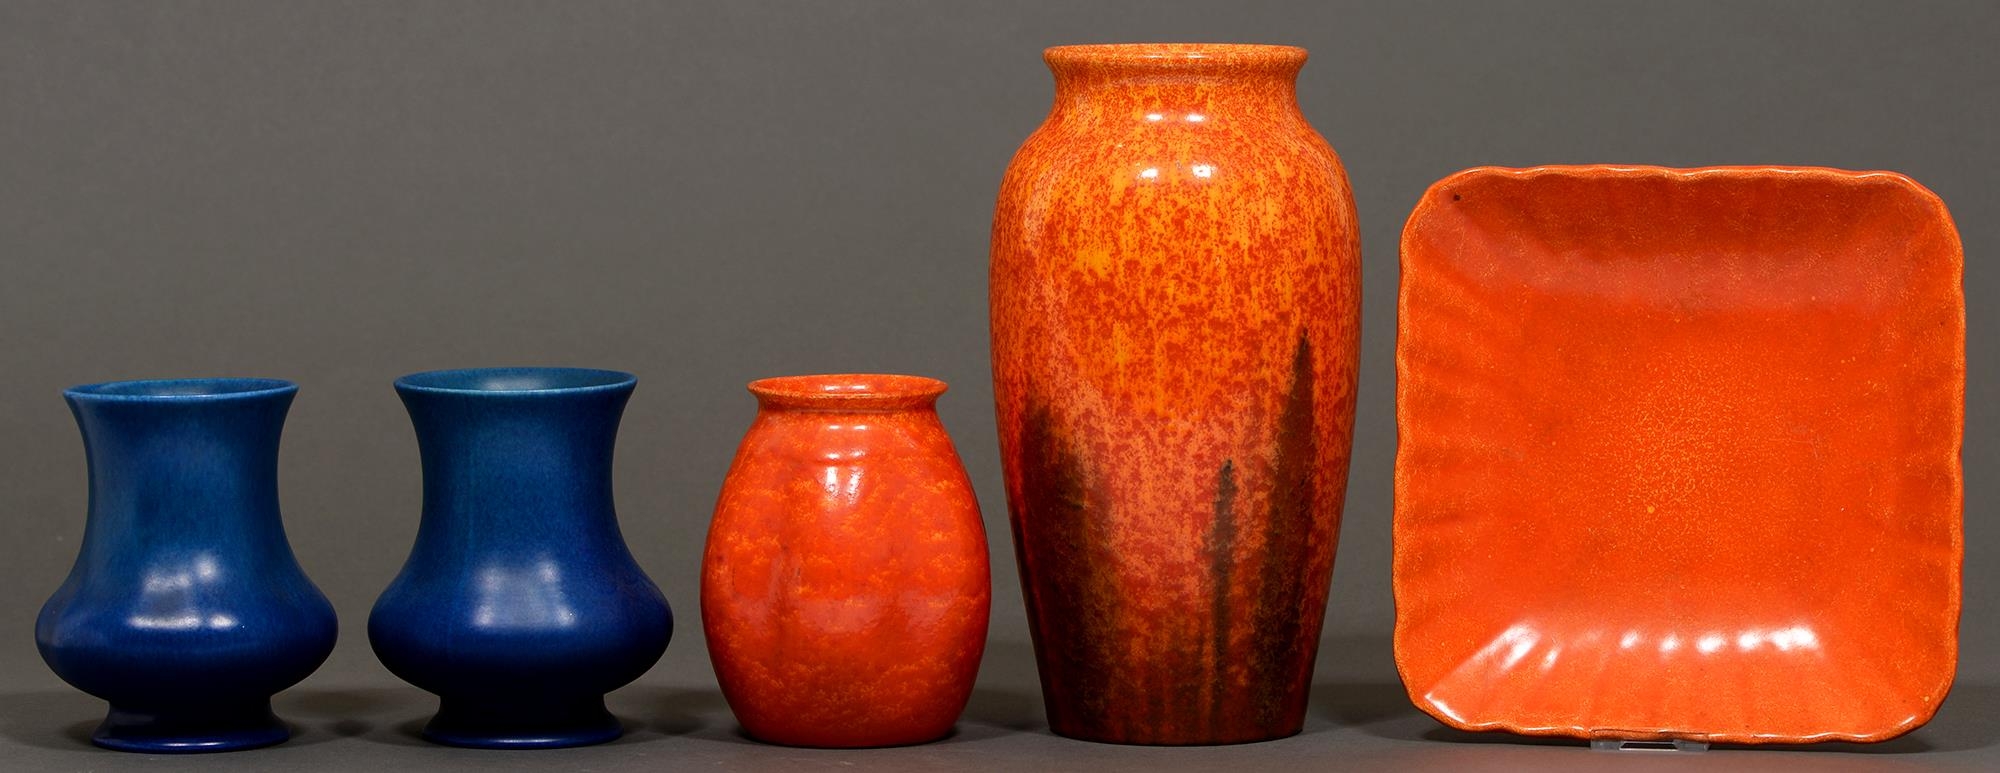 Four Pilkington's Royal Lancastrian vases and a dish